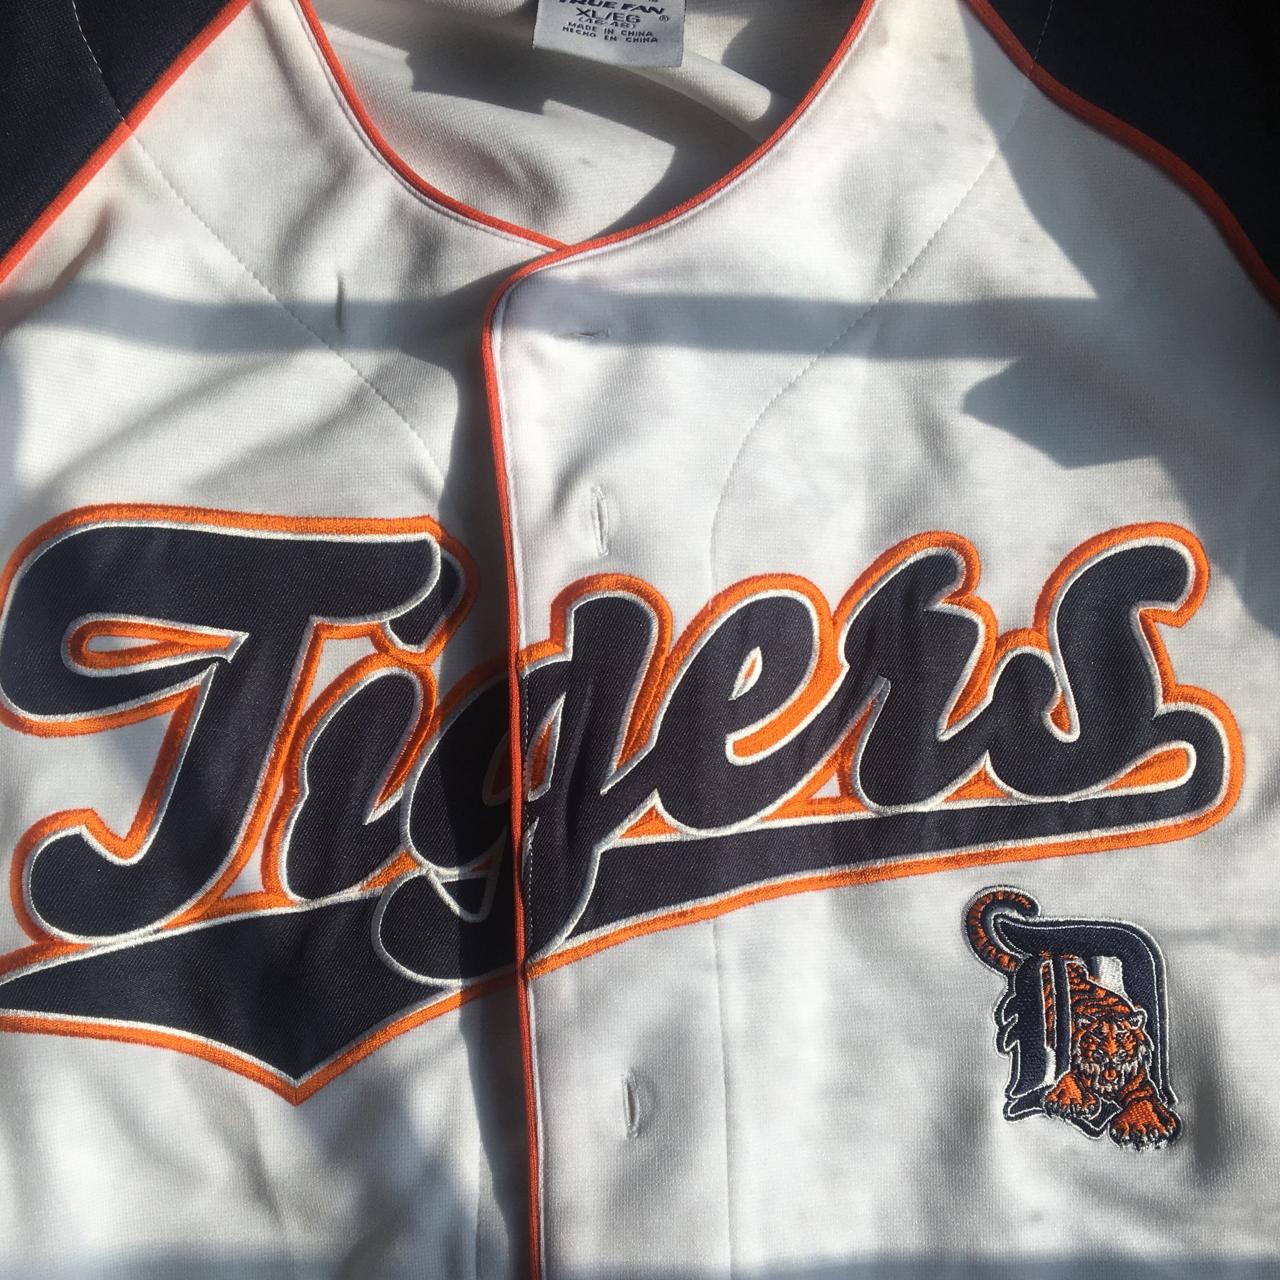 Vintage detroit tigers baseball jersey russell - Depop